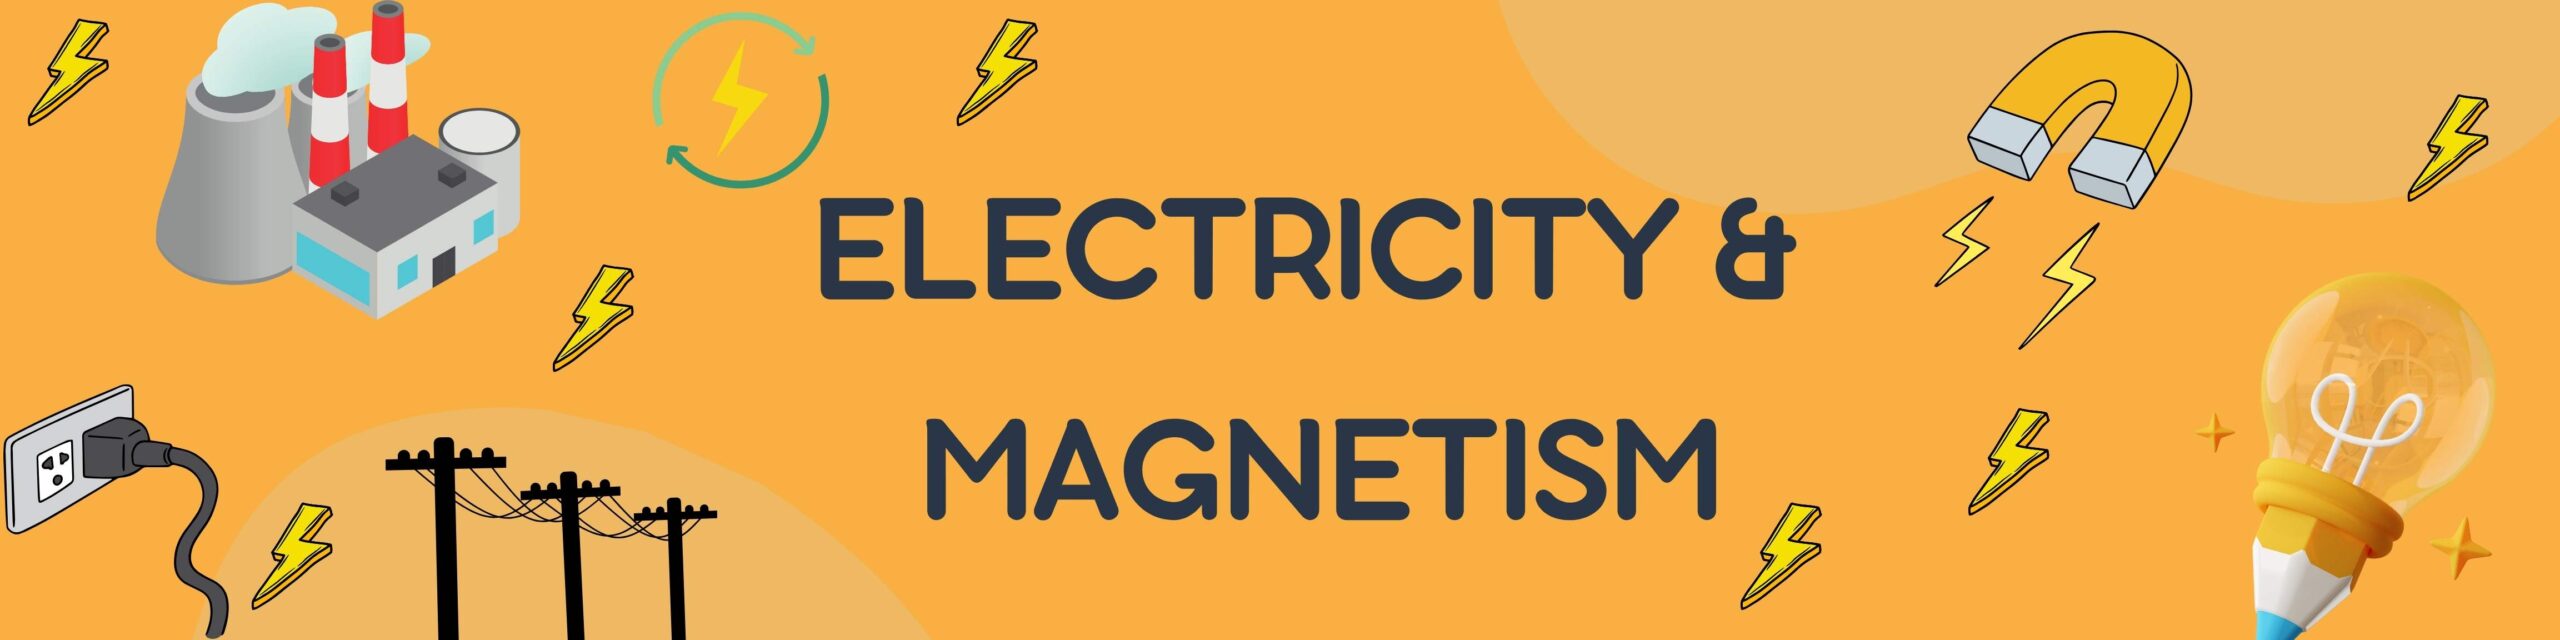 Electricity & Magnetism Unit